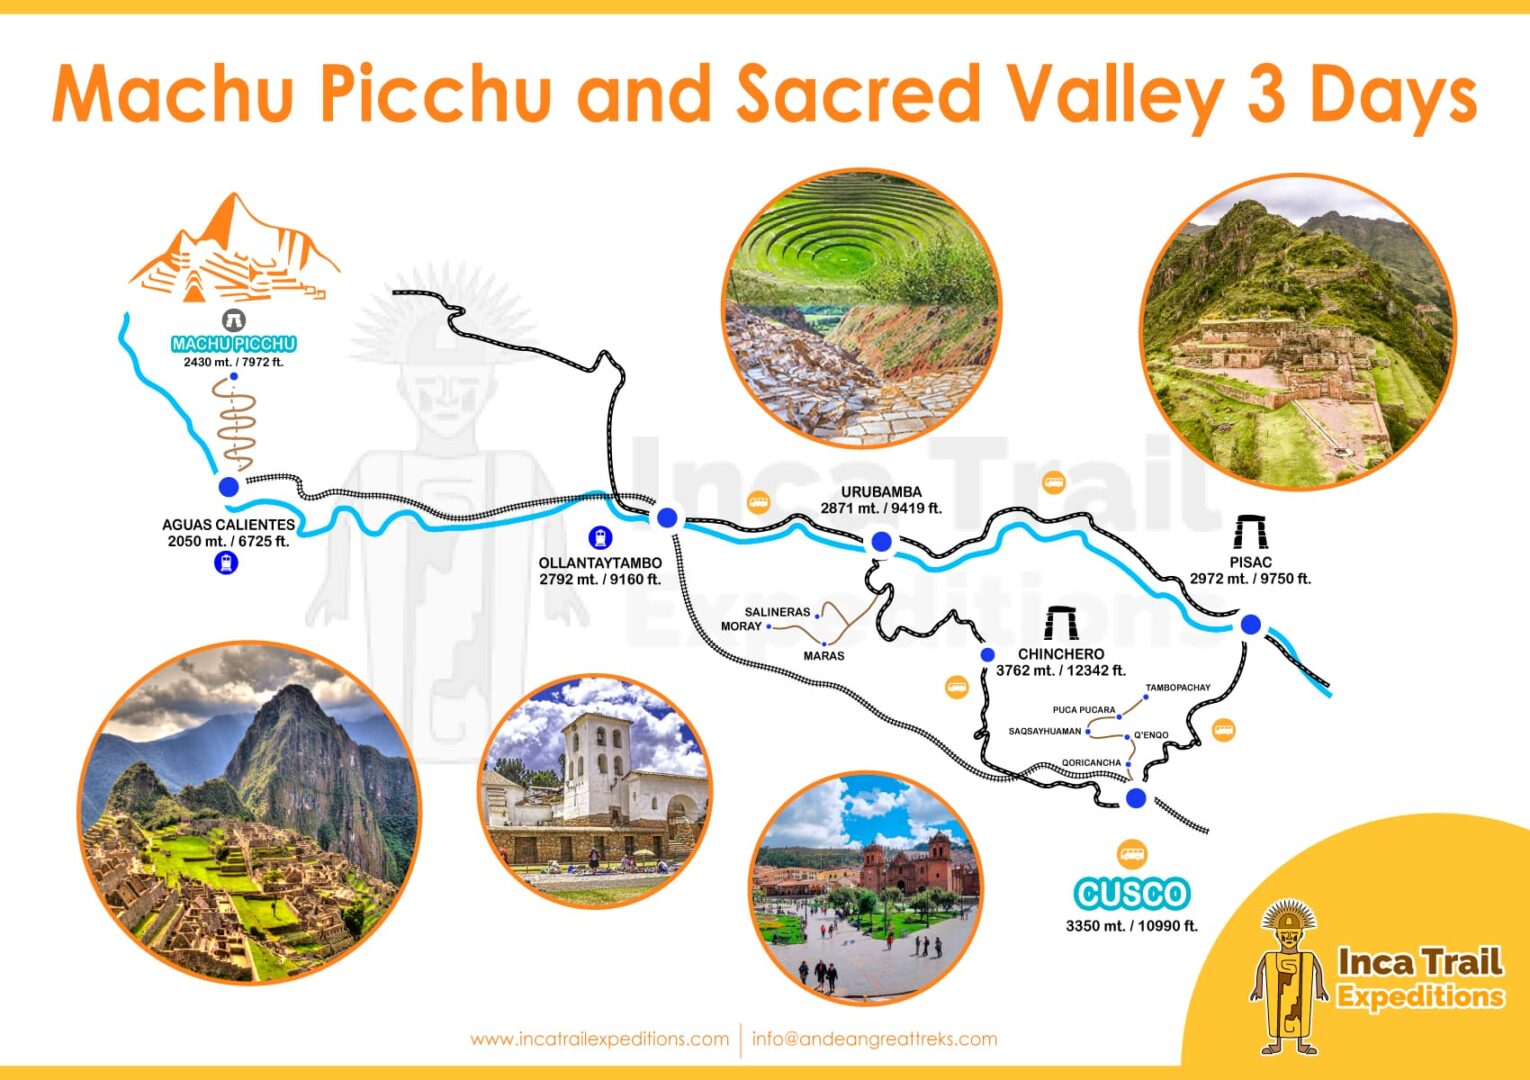 Explore Cusco, Machu Picchu and Sacred Valley 3 Days